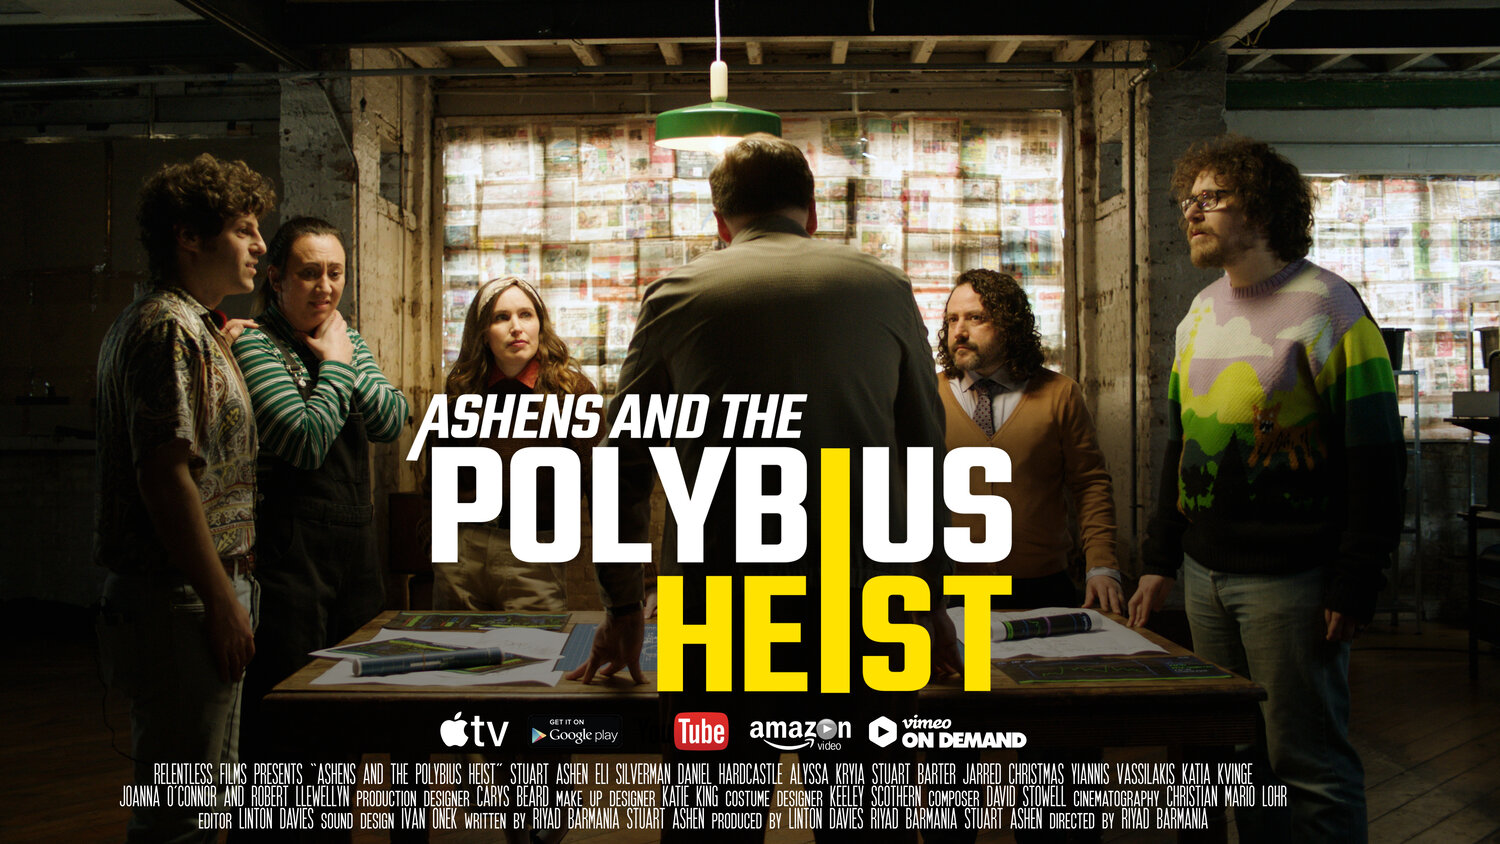 Ashens and the polybius heist, stuart ashen, riyad barmania, movie, vod, comedy, 80s, geek speak, review